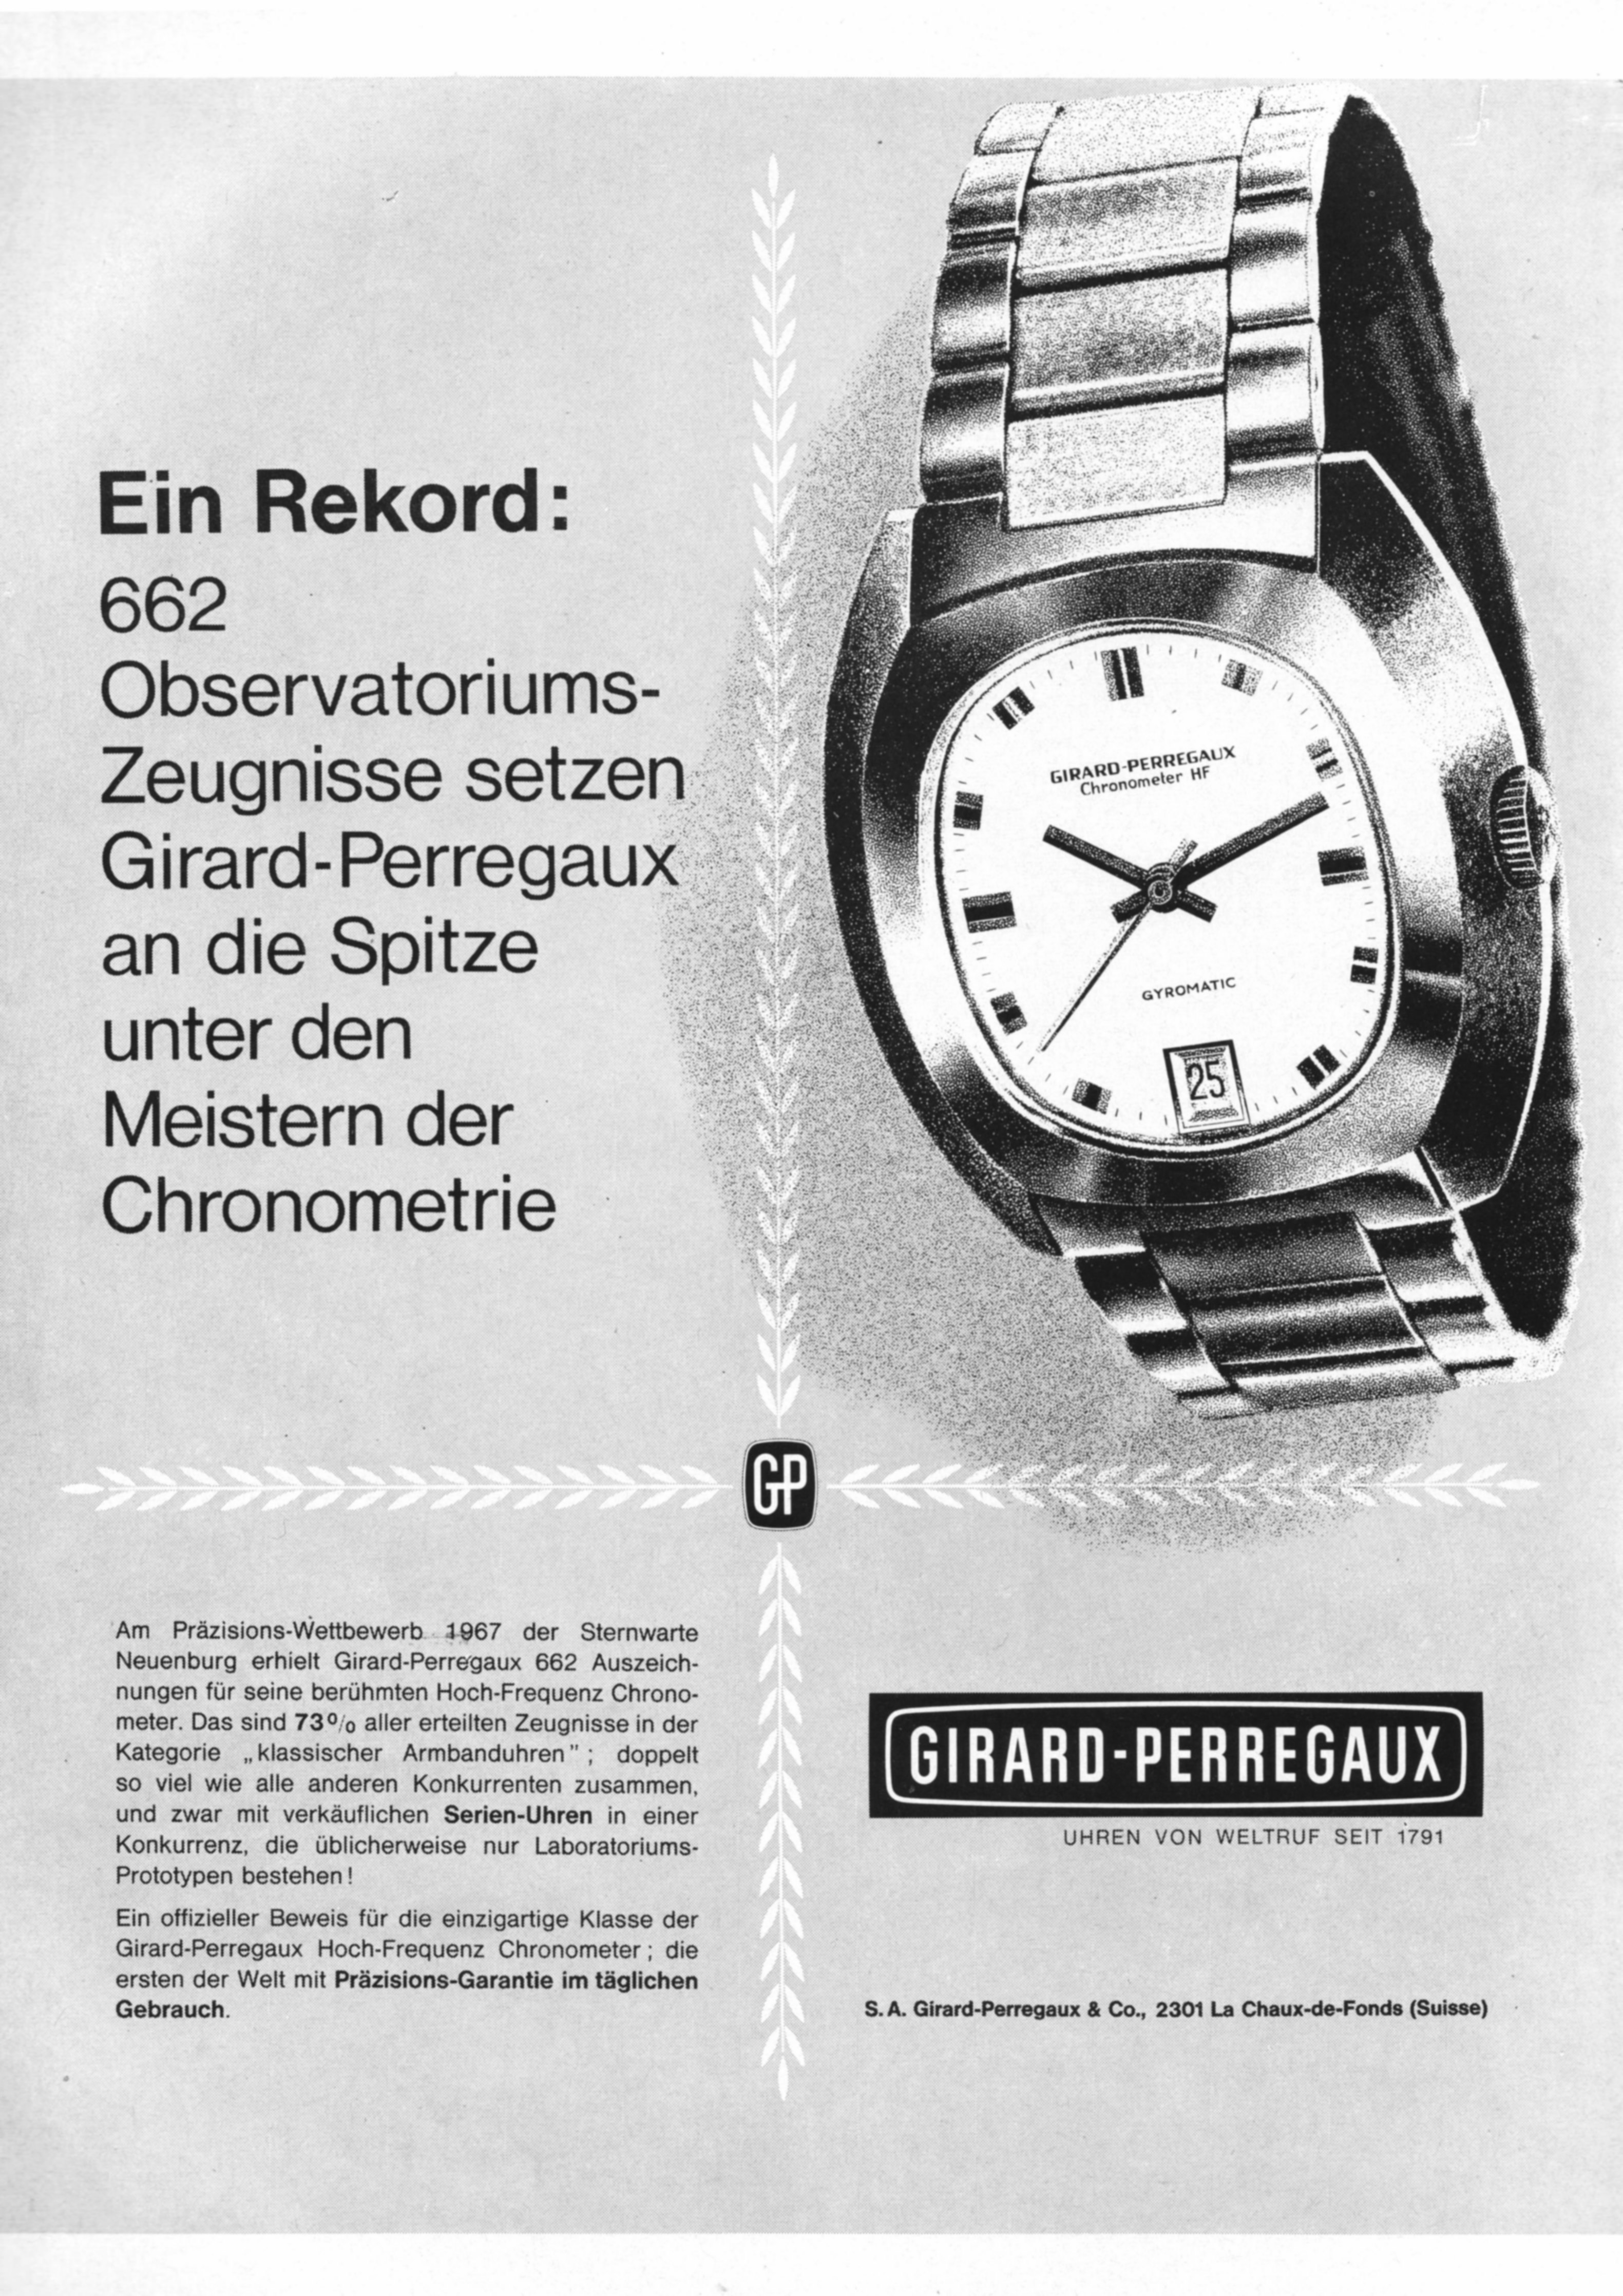 Girard-Perregaux 1968 54.jpg